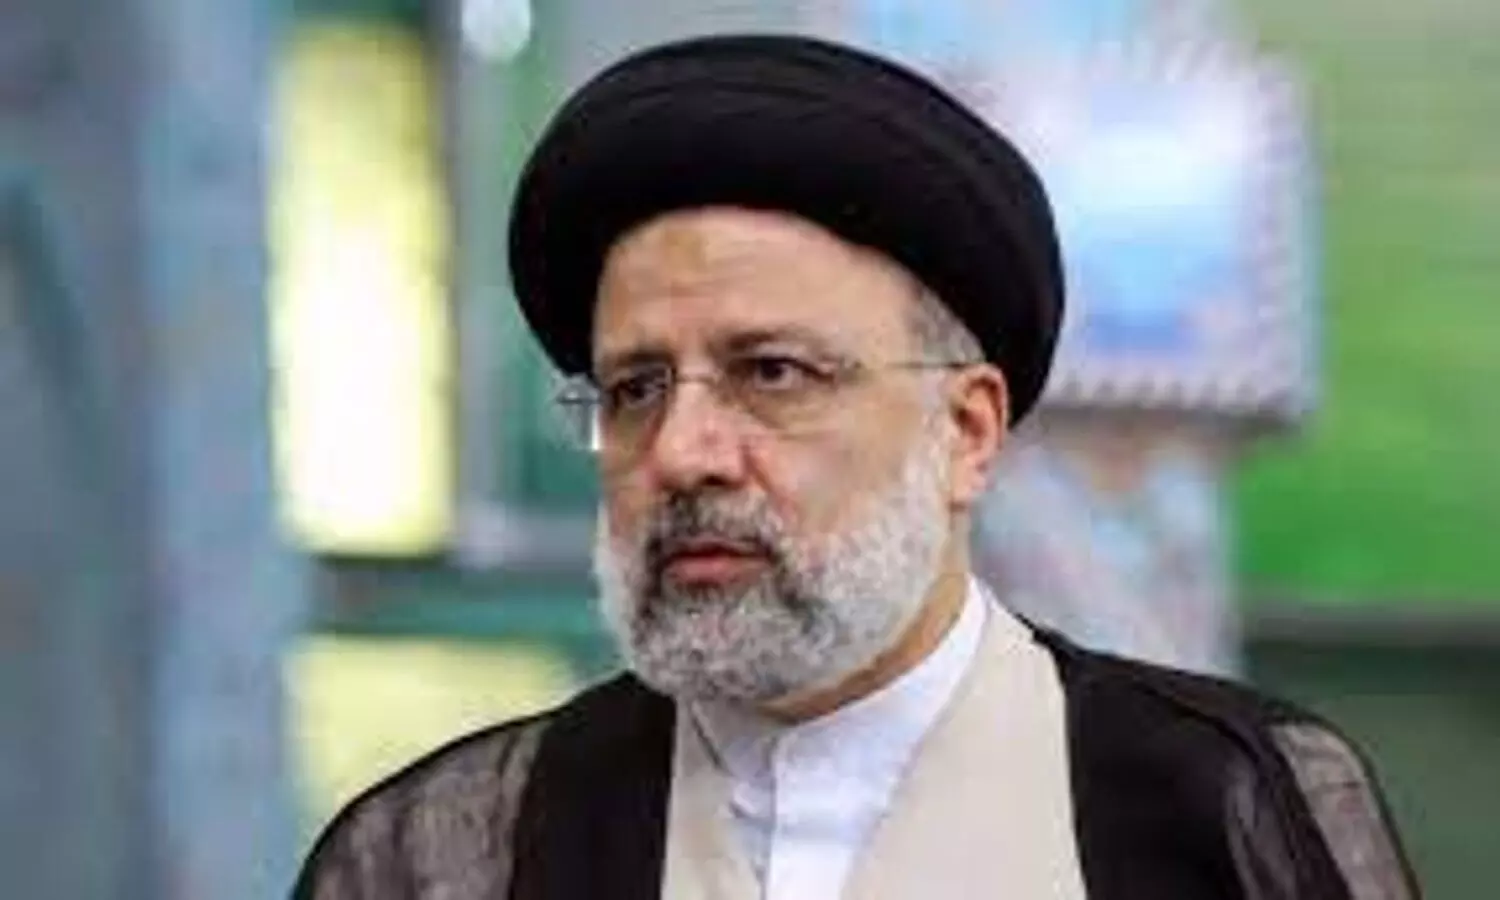 Iranian President Ibrahim Raisi